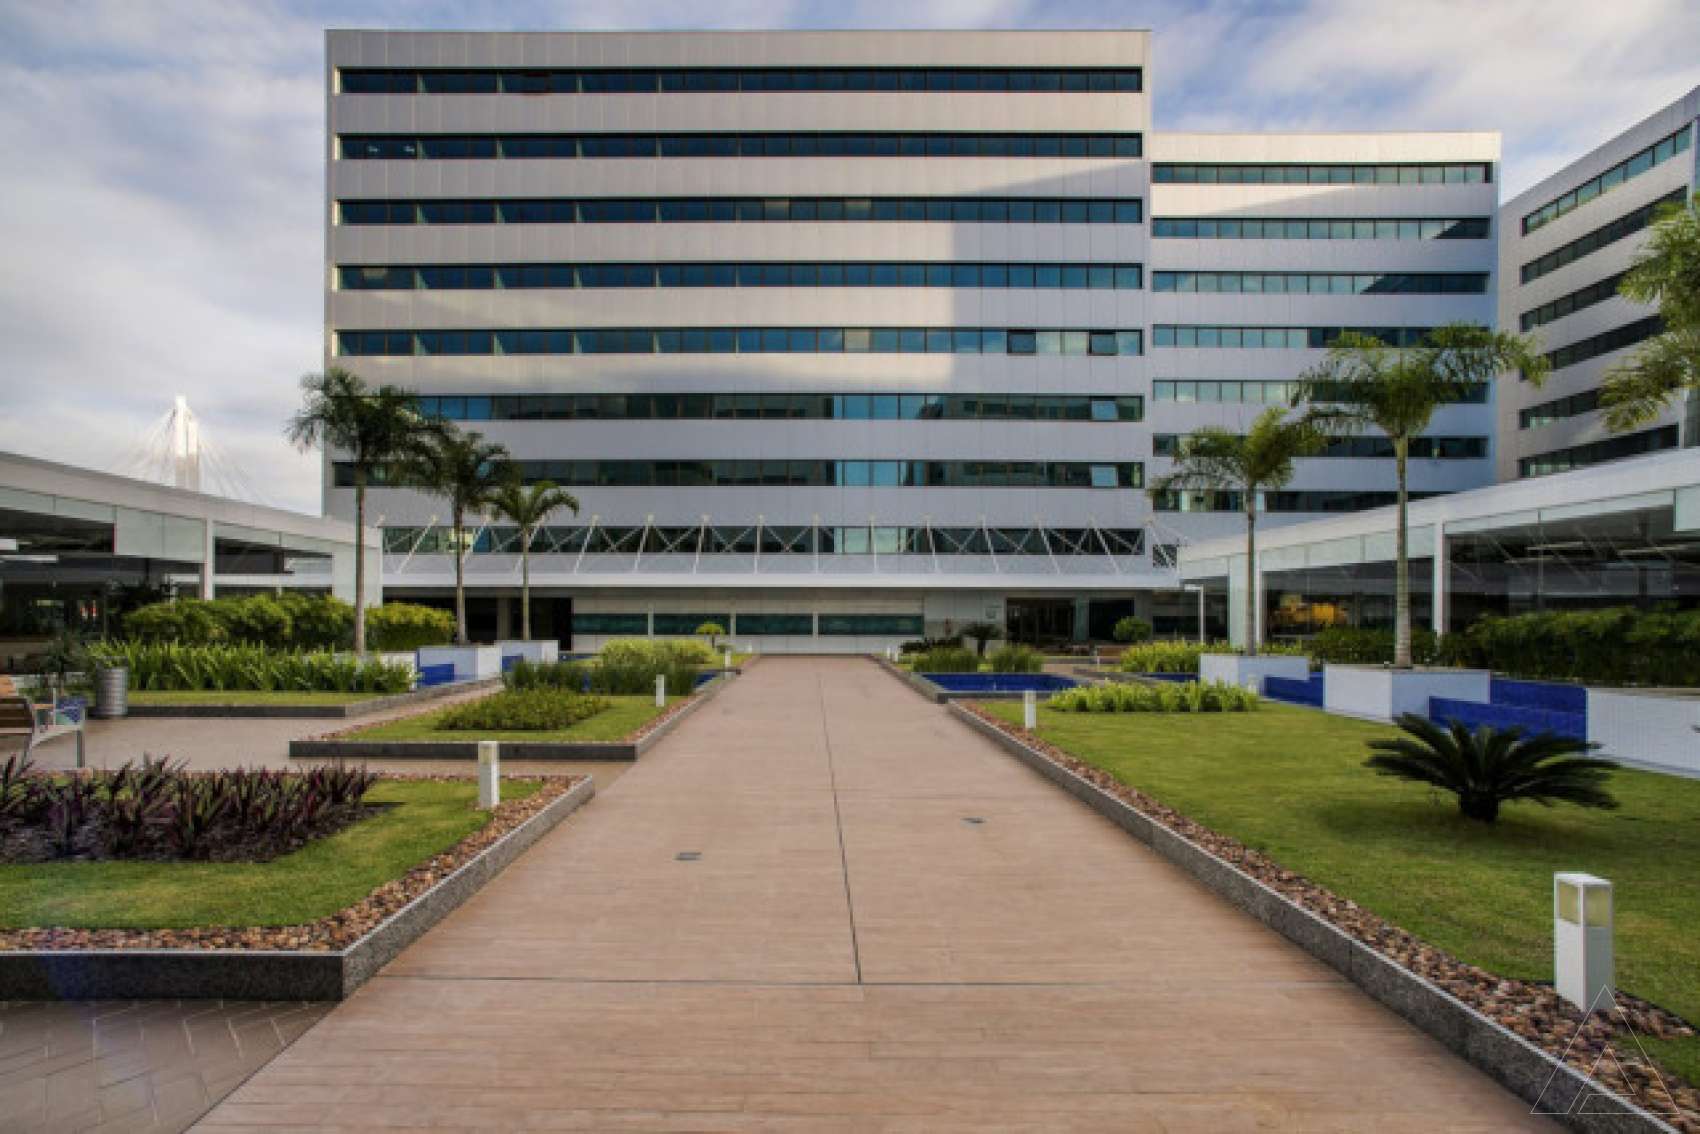 Hangar Business Park - Complexo empresarial e campus corporativo